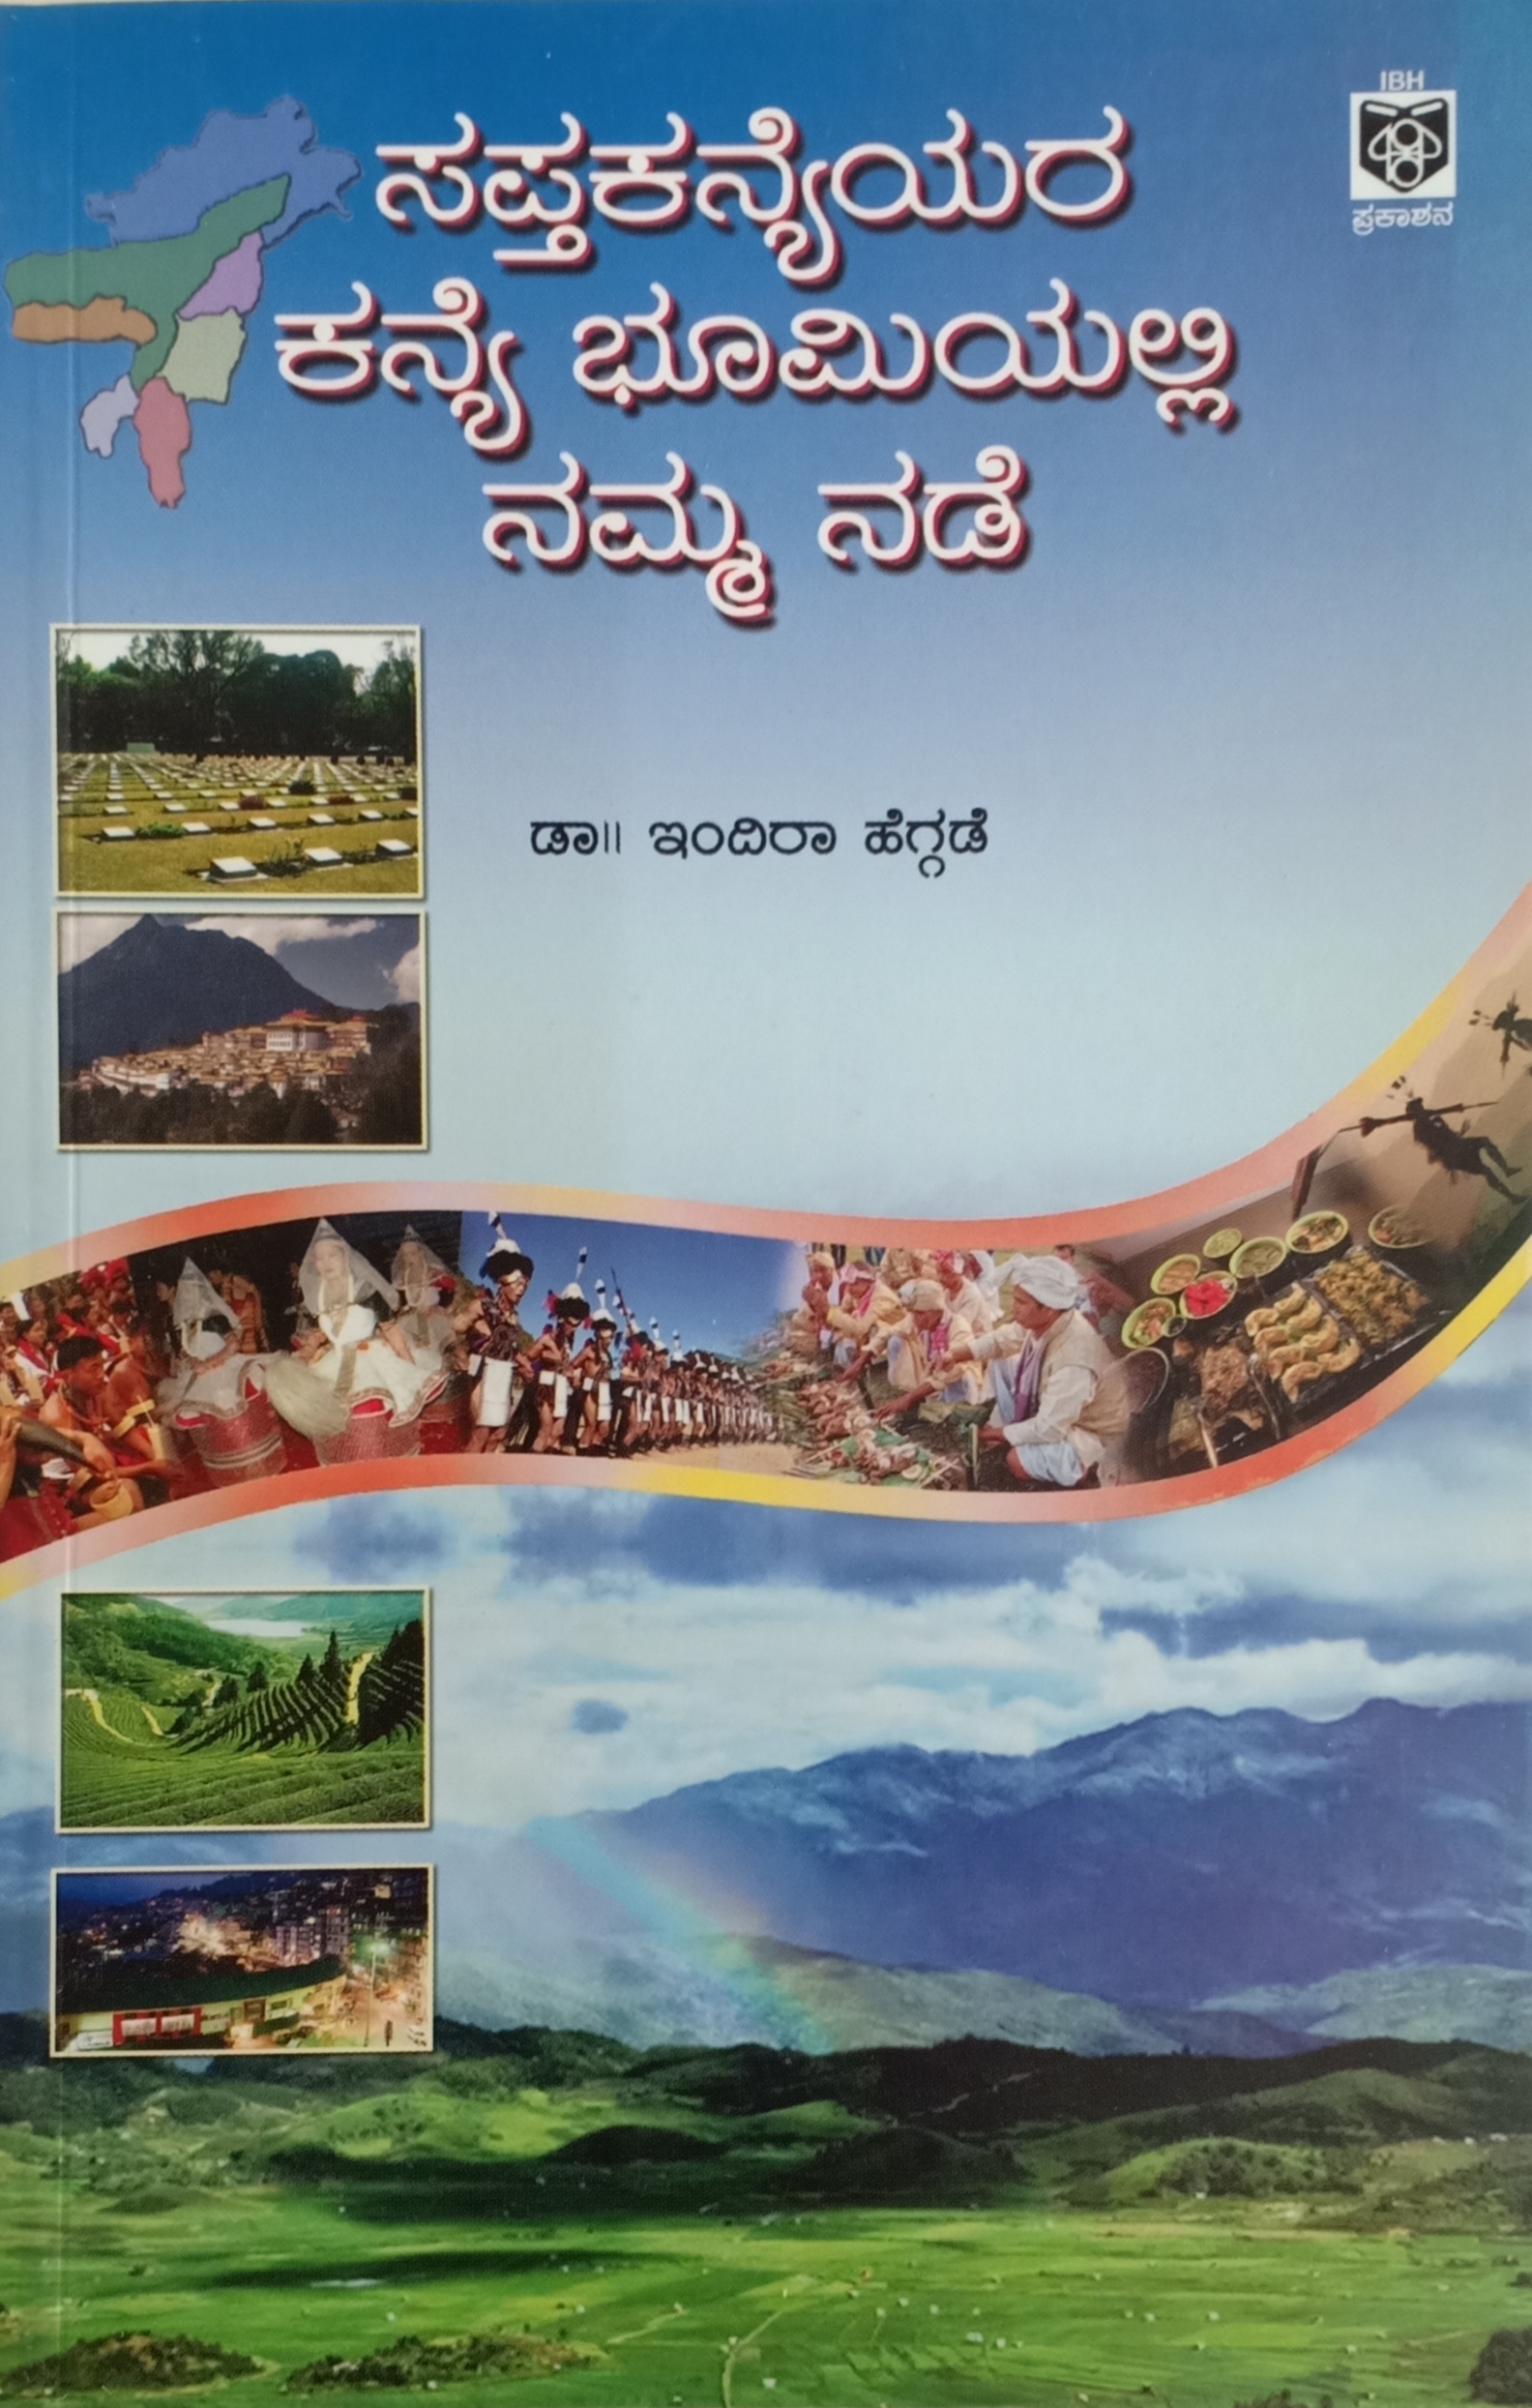 Sapthakanyeyara kanye bhoomiyalli namma nade ಸಪ್ತ ಕನ್ಯೆಯರ ಭೂಮಿಯಲ್ಲಿ ನಮ್ಮ ನಡೆ